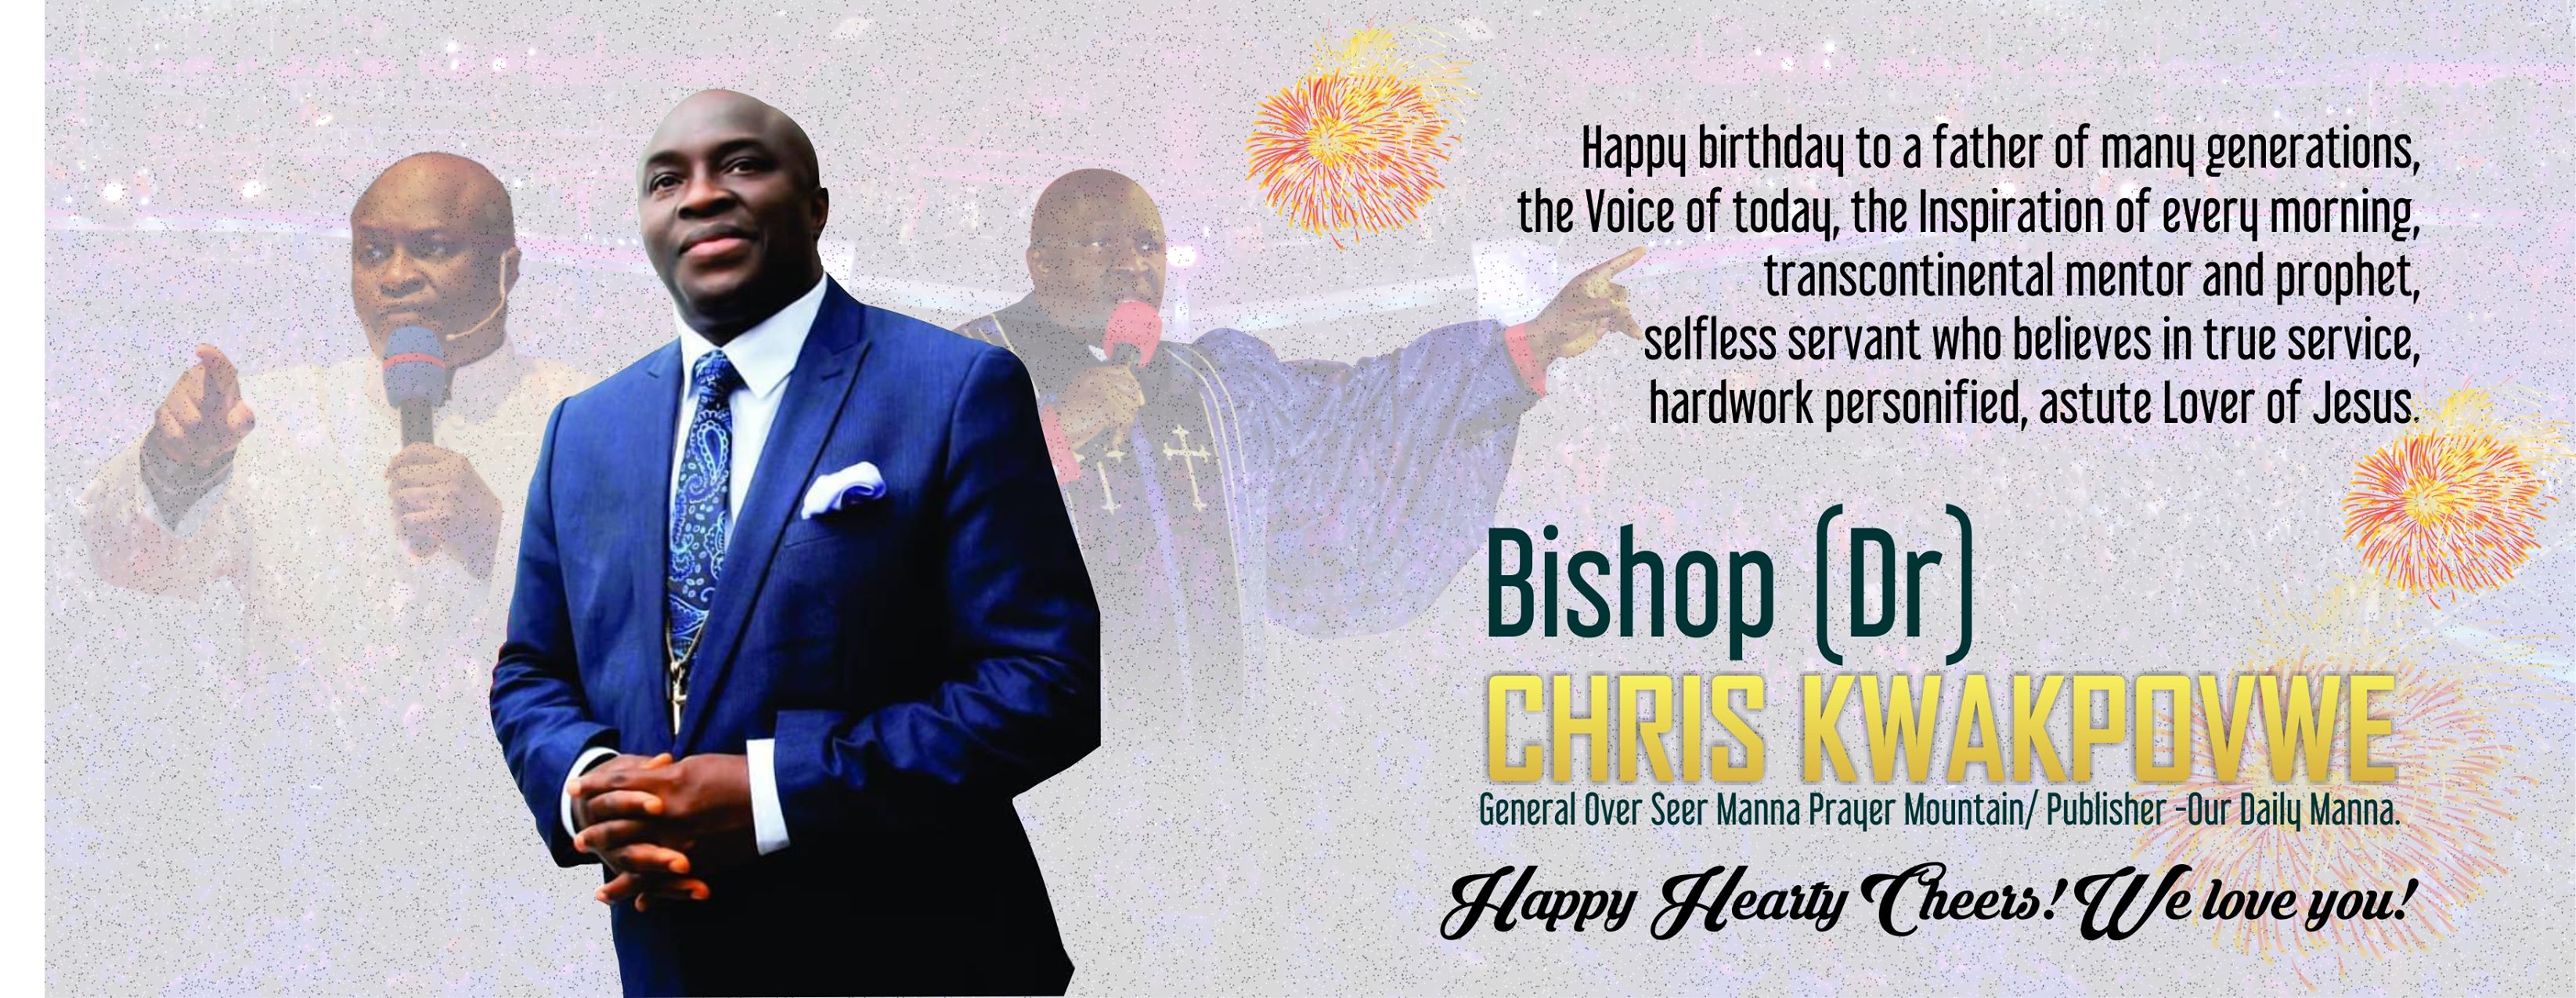 Happy birthday Bishop Dr Chris